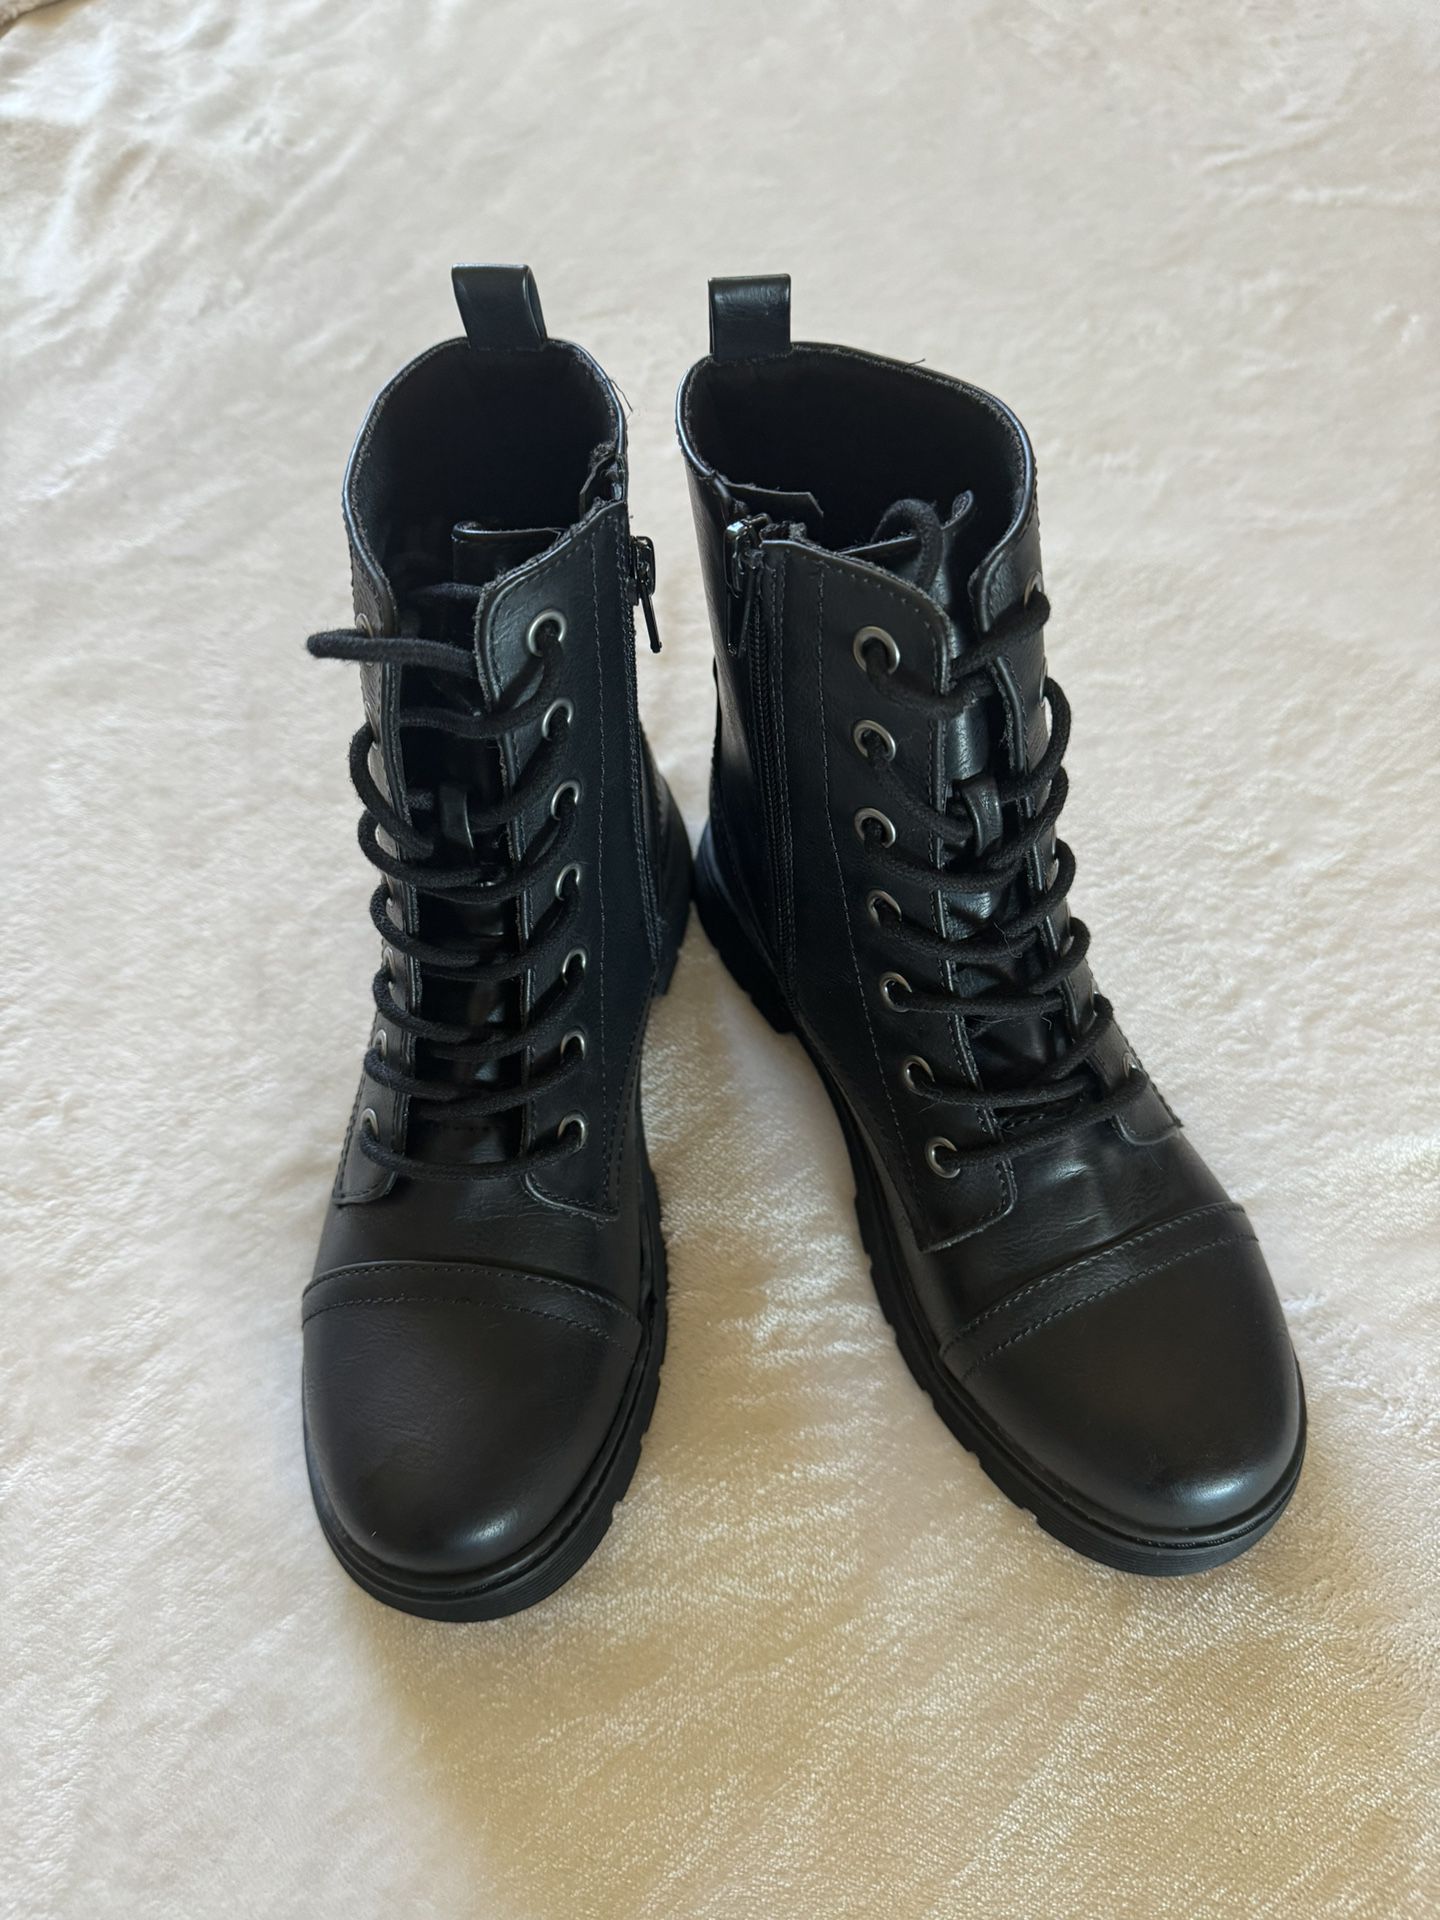 Arizona Jean Company Girls Black Boots Size 5